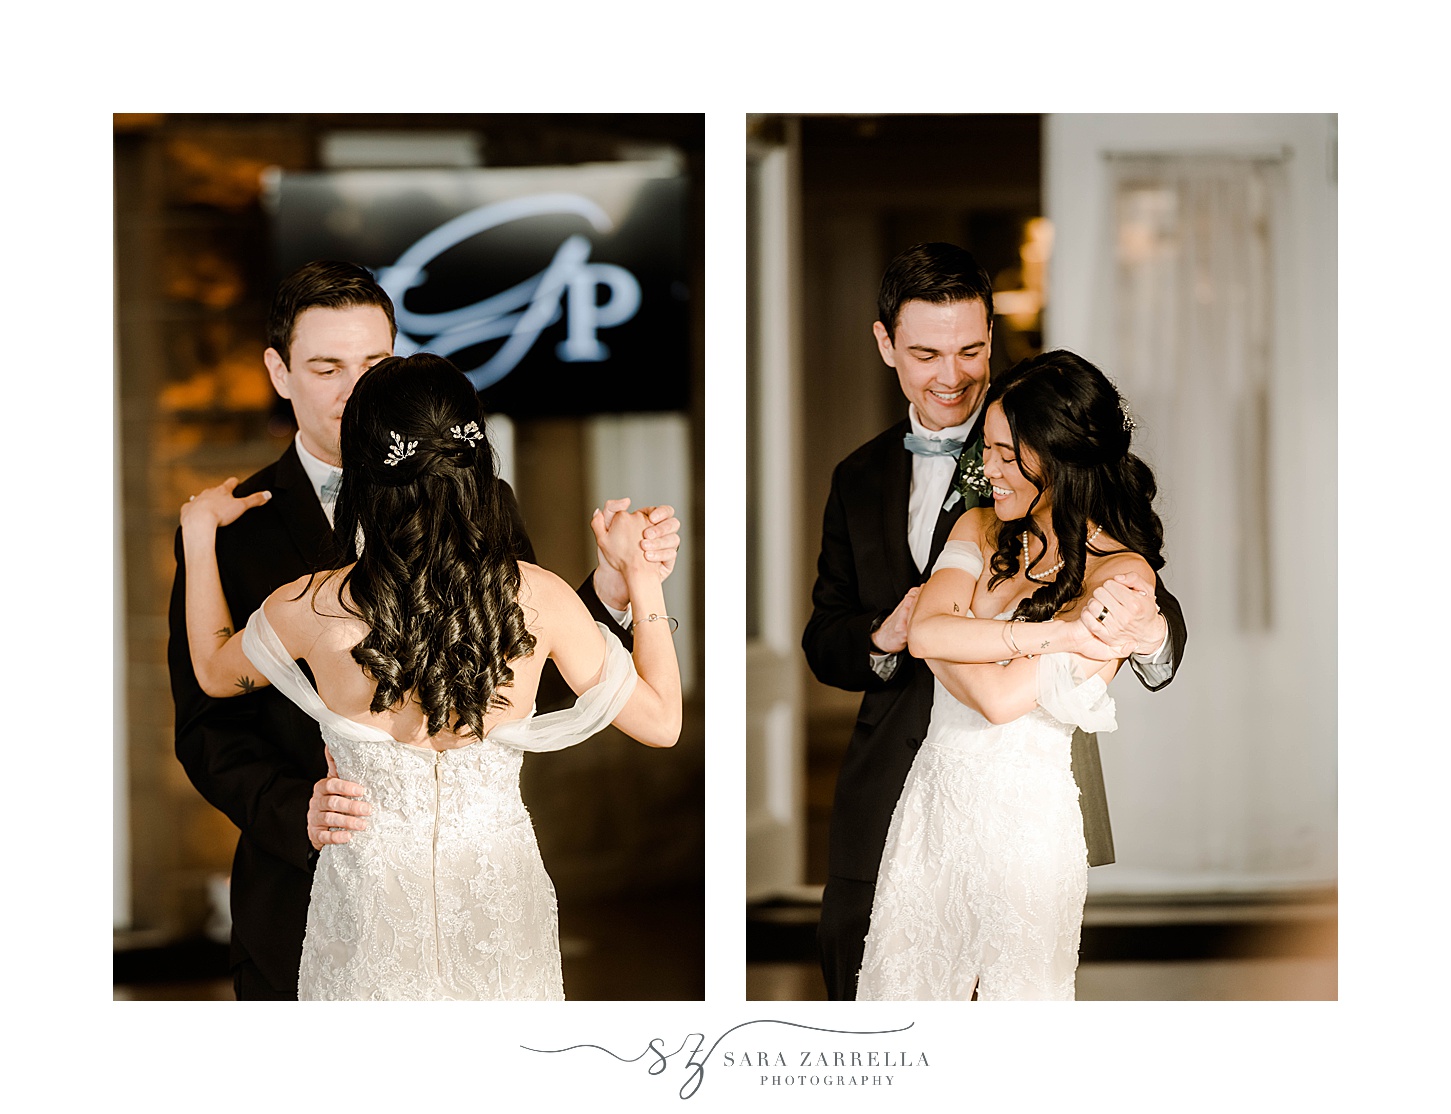 groom twirls bride into him during first dance at wedding reception in Newport RI